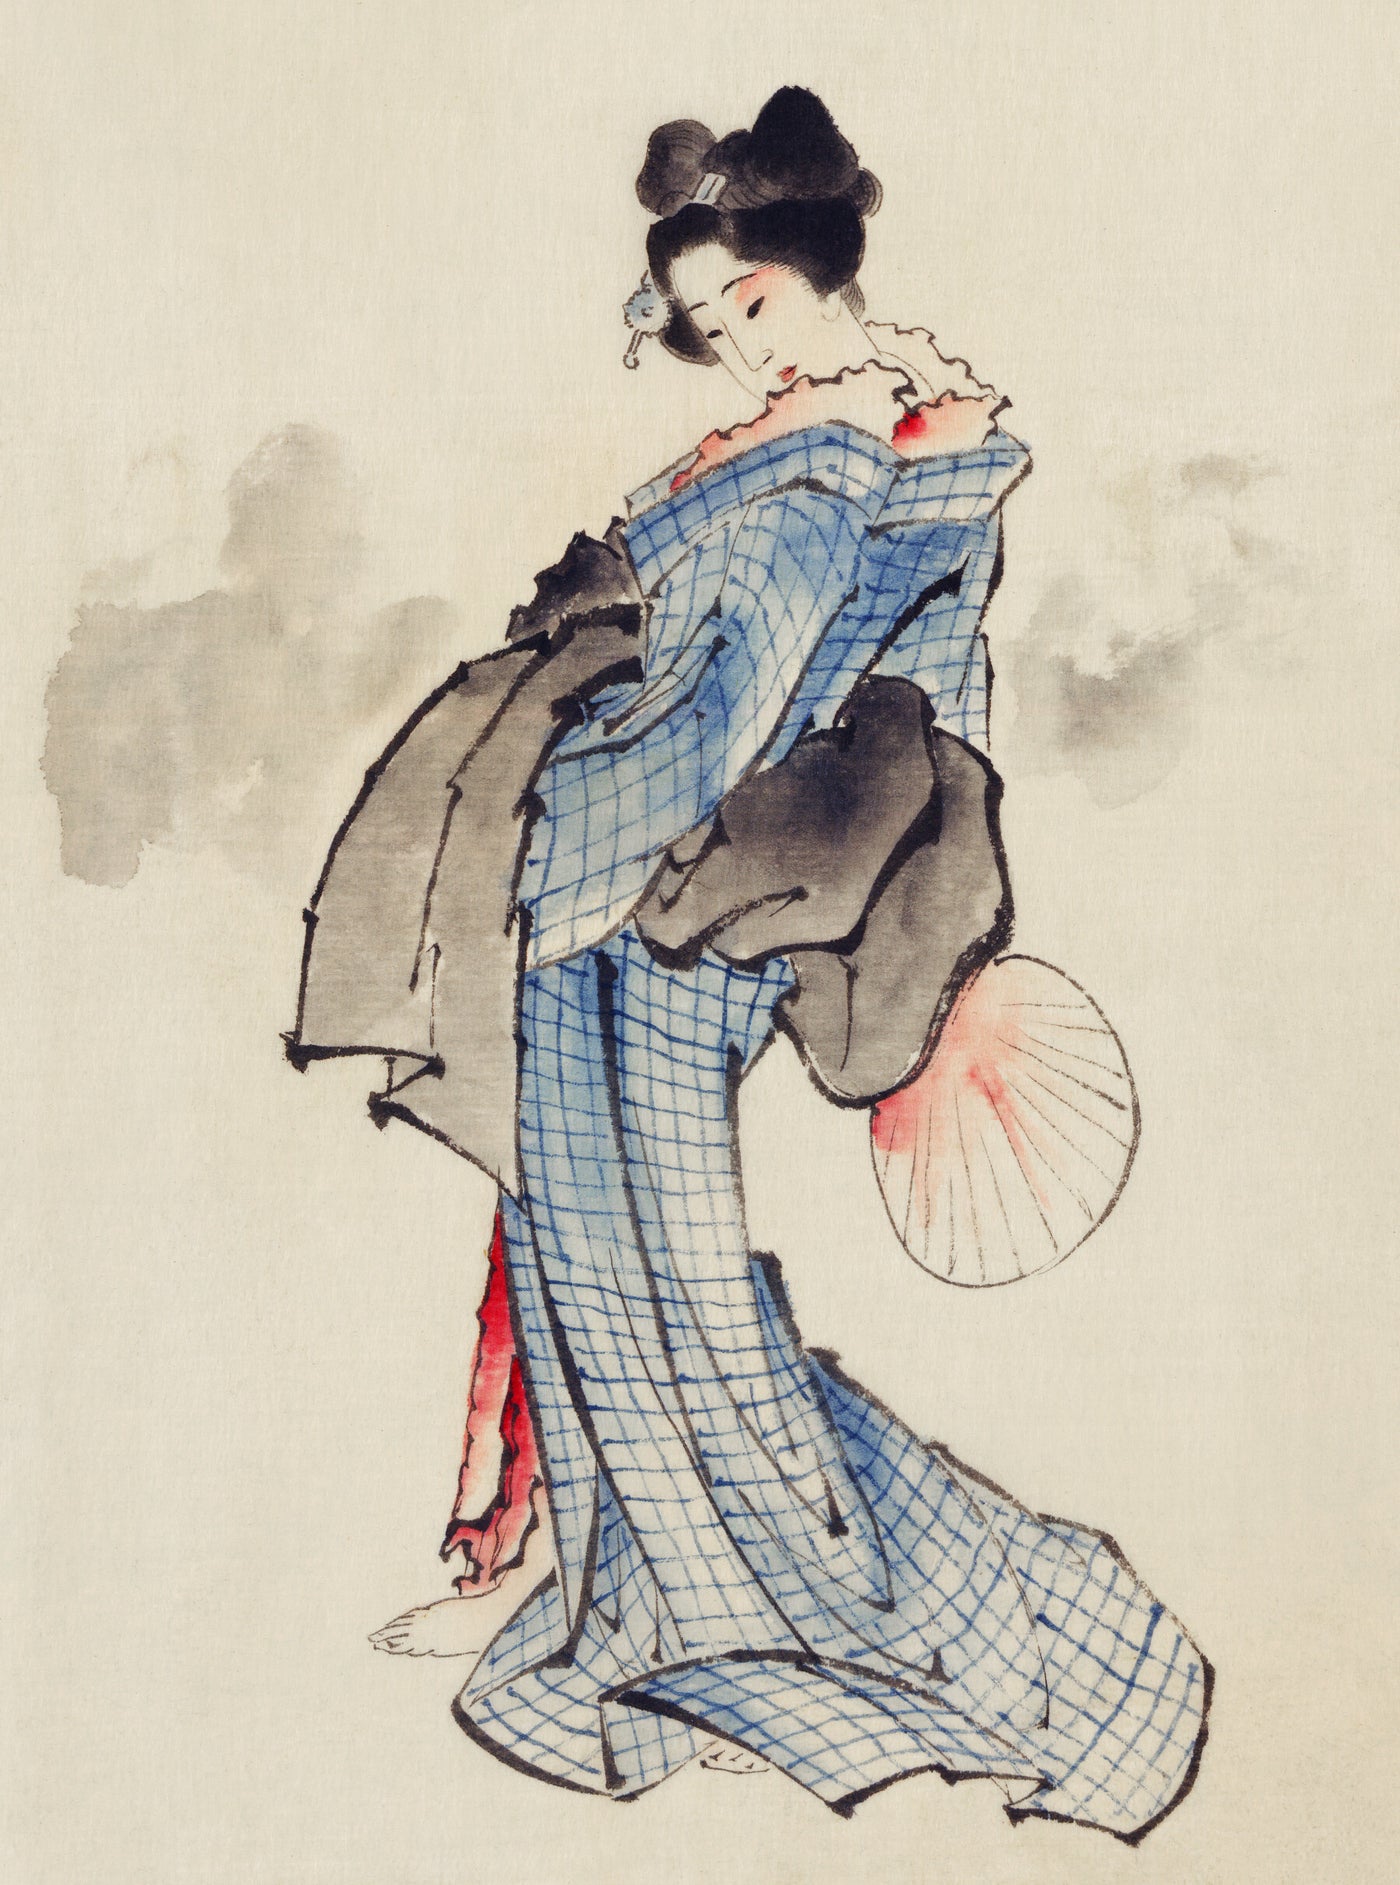 Vrouw met een waaier - Katsushika Hokusai